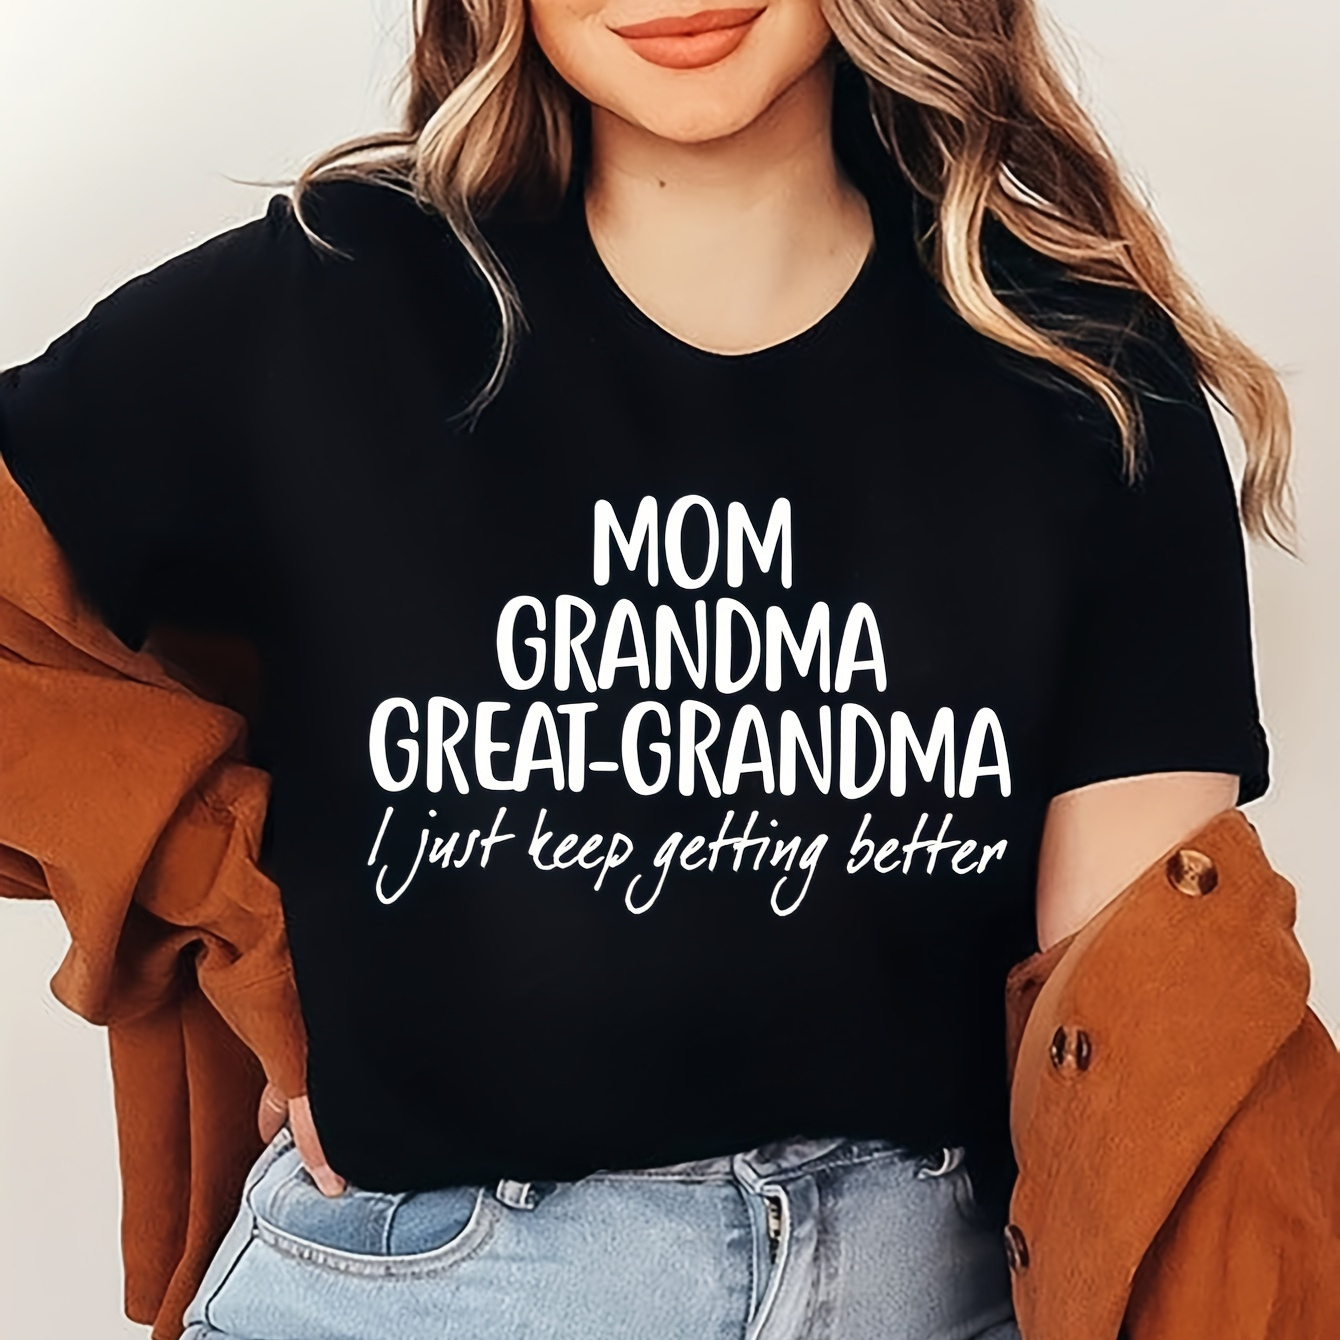 

Mom Grandma Letter Print T-shirt, Short Sleeve Crew Neck Casual Top For Summer & Spring, Women's Clothing